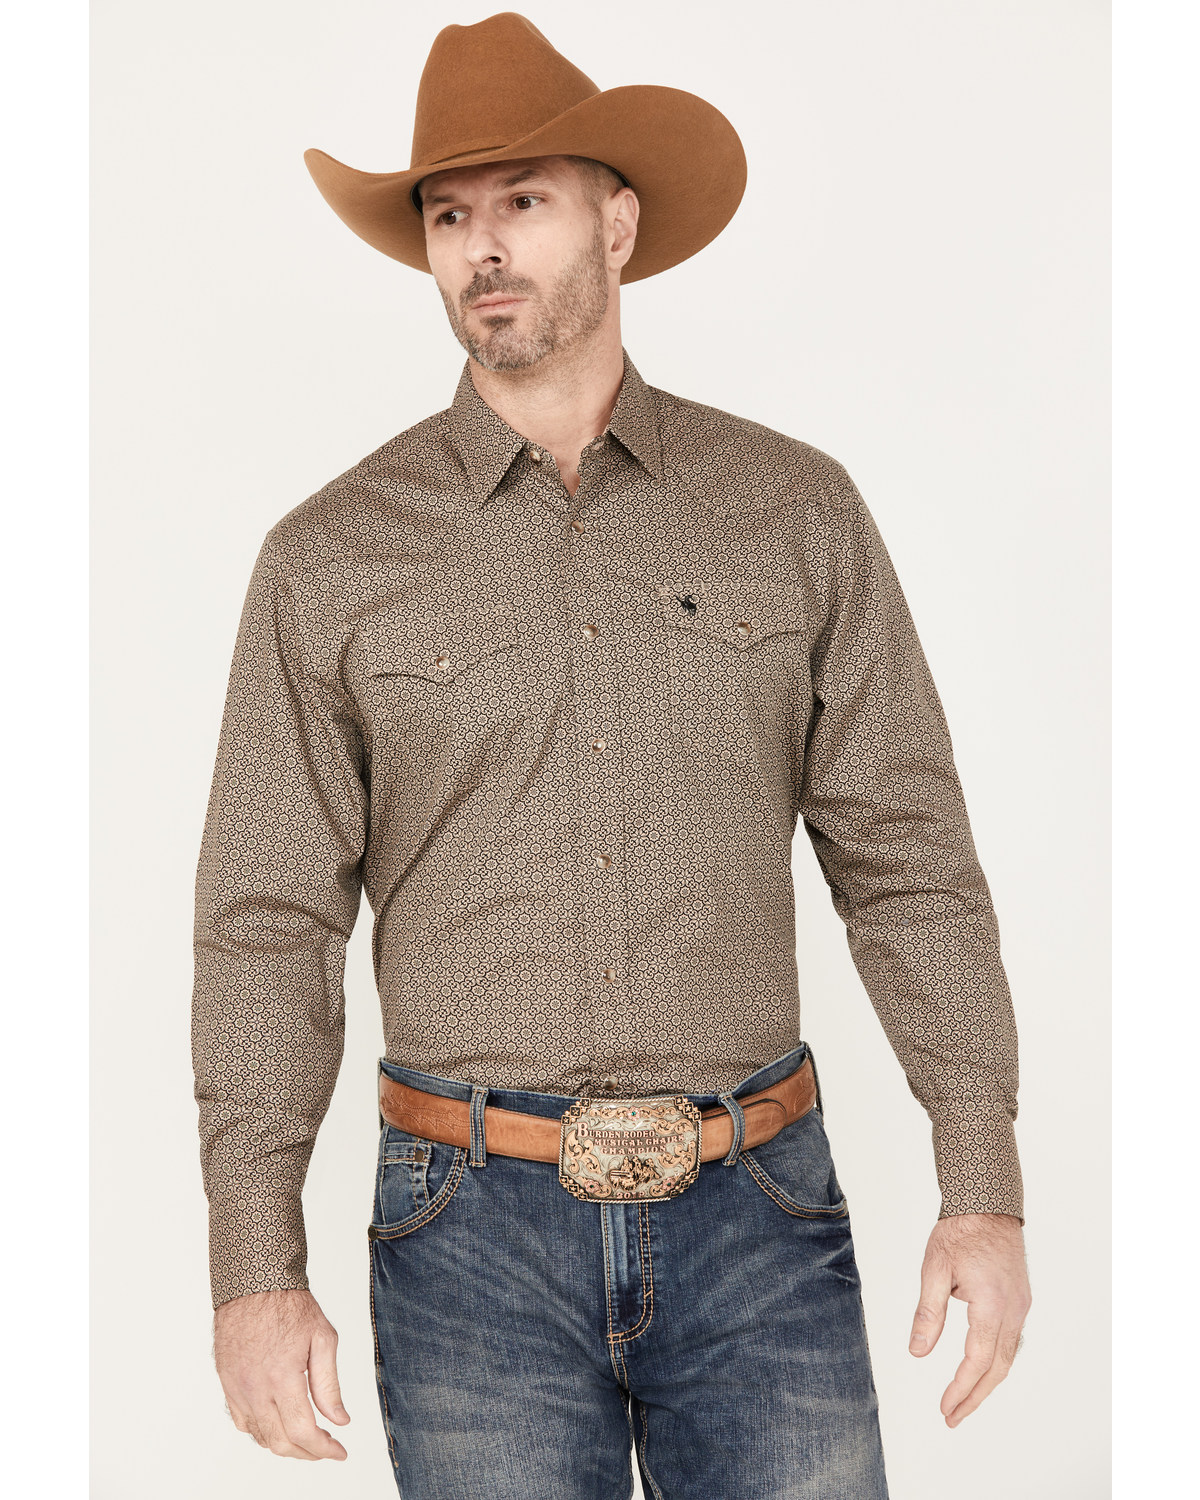 Rodeo Clothing Men's Medallion Print Long Sleeve Snap Western Shirt